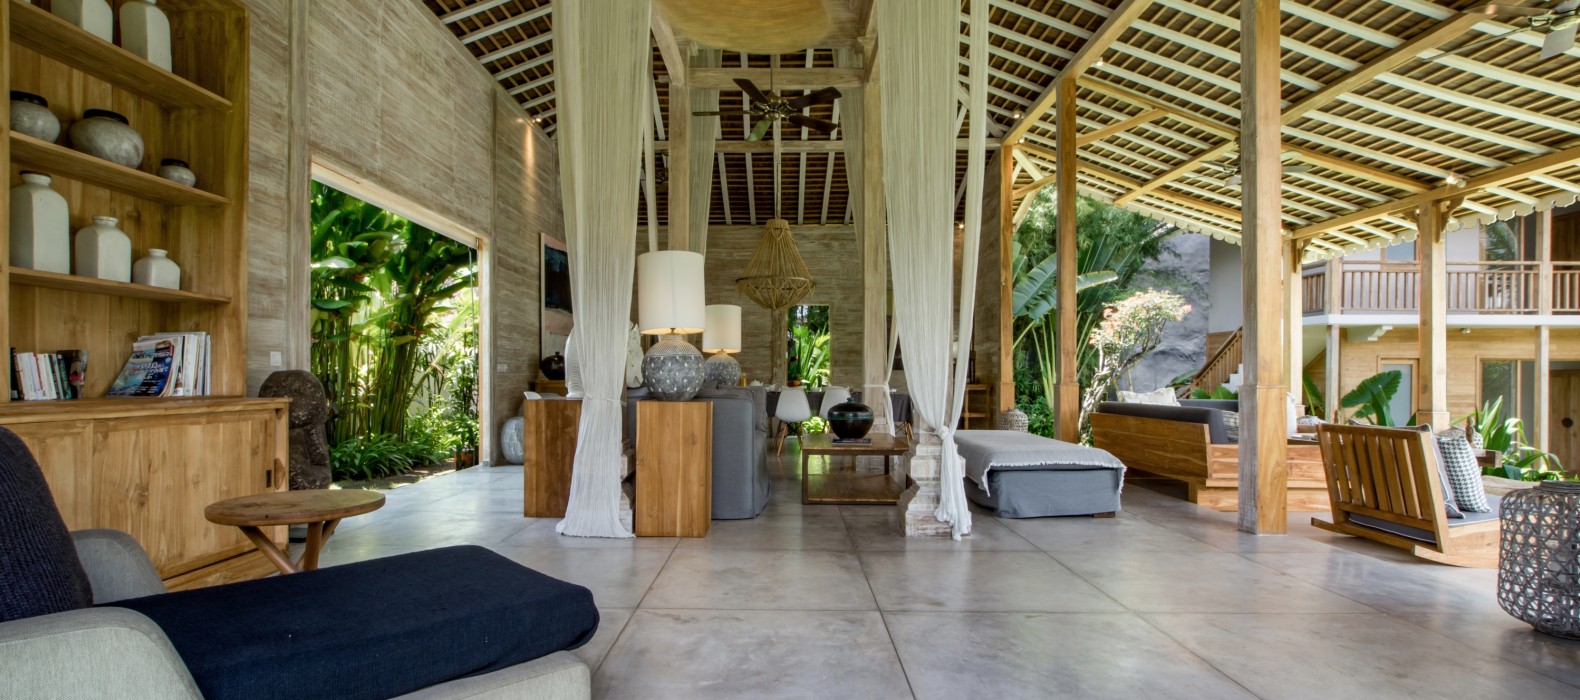 Living room of Villa Alea in Bali